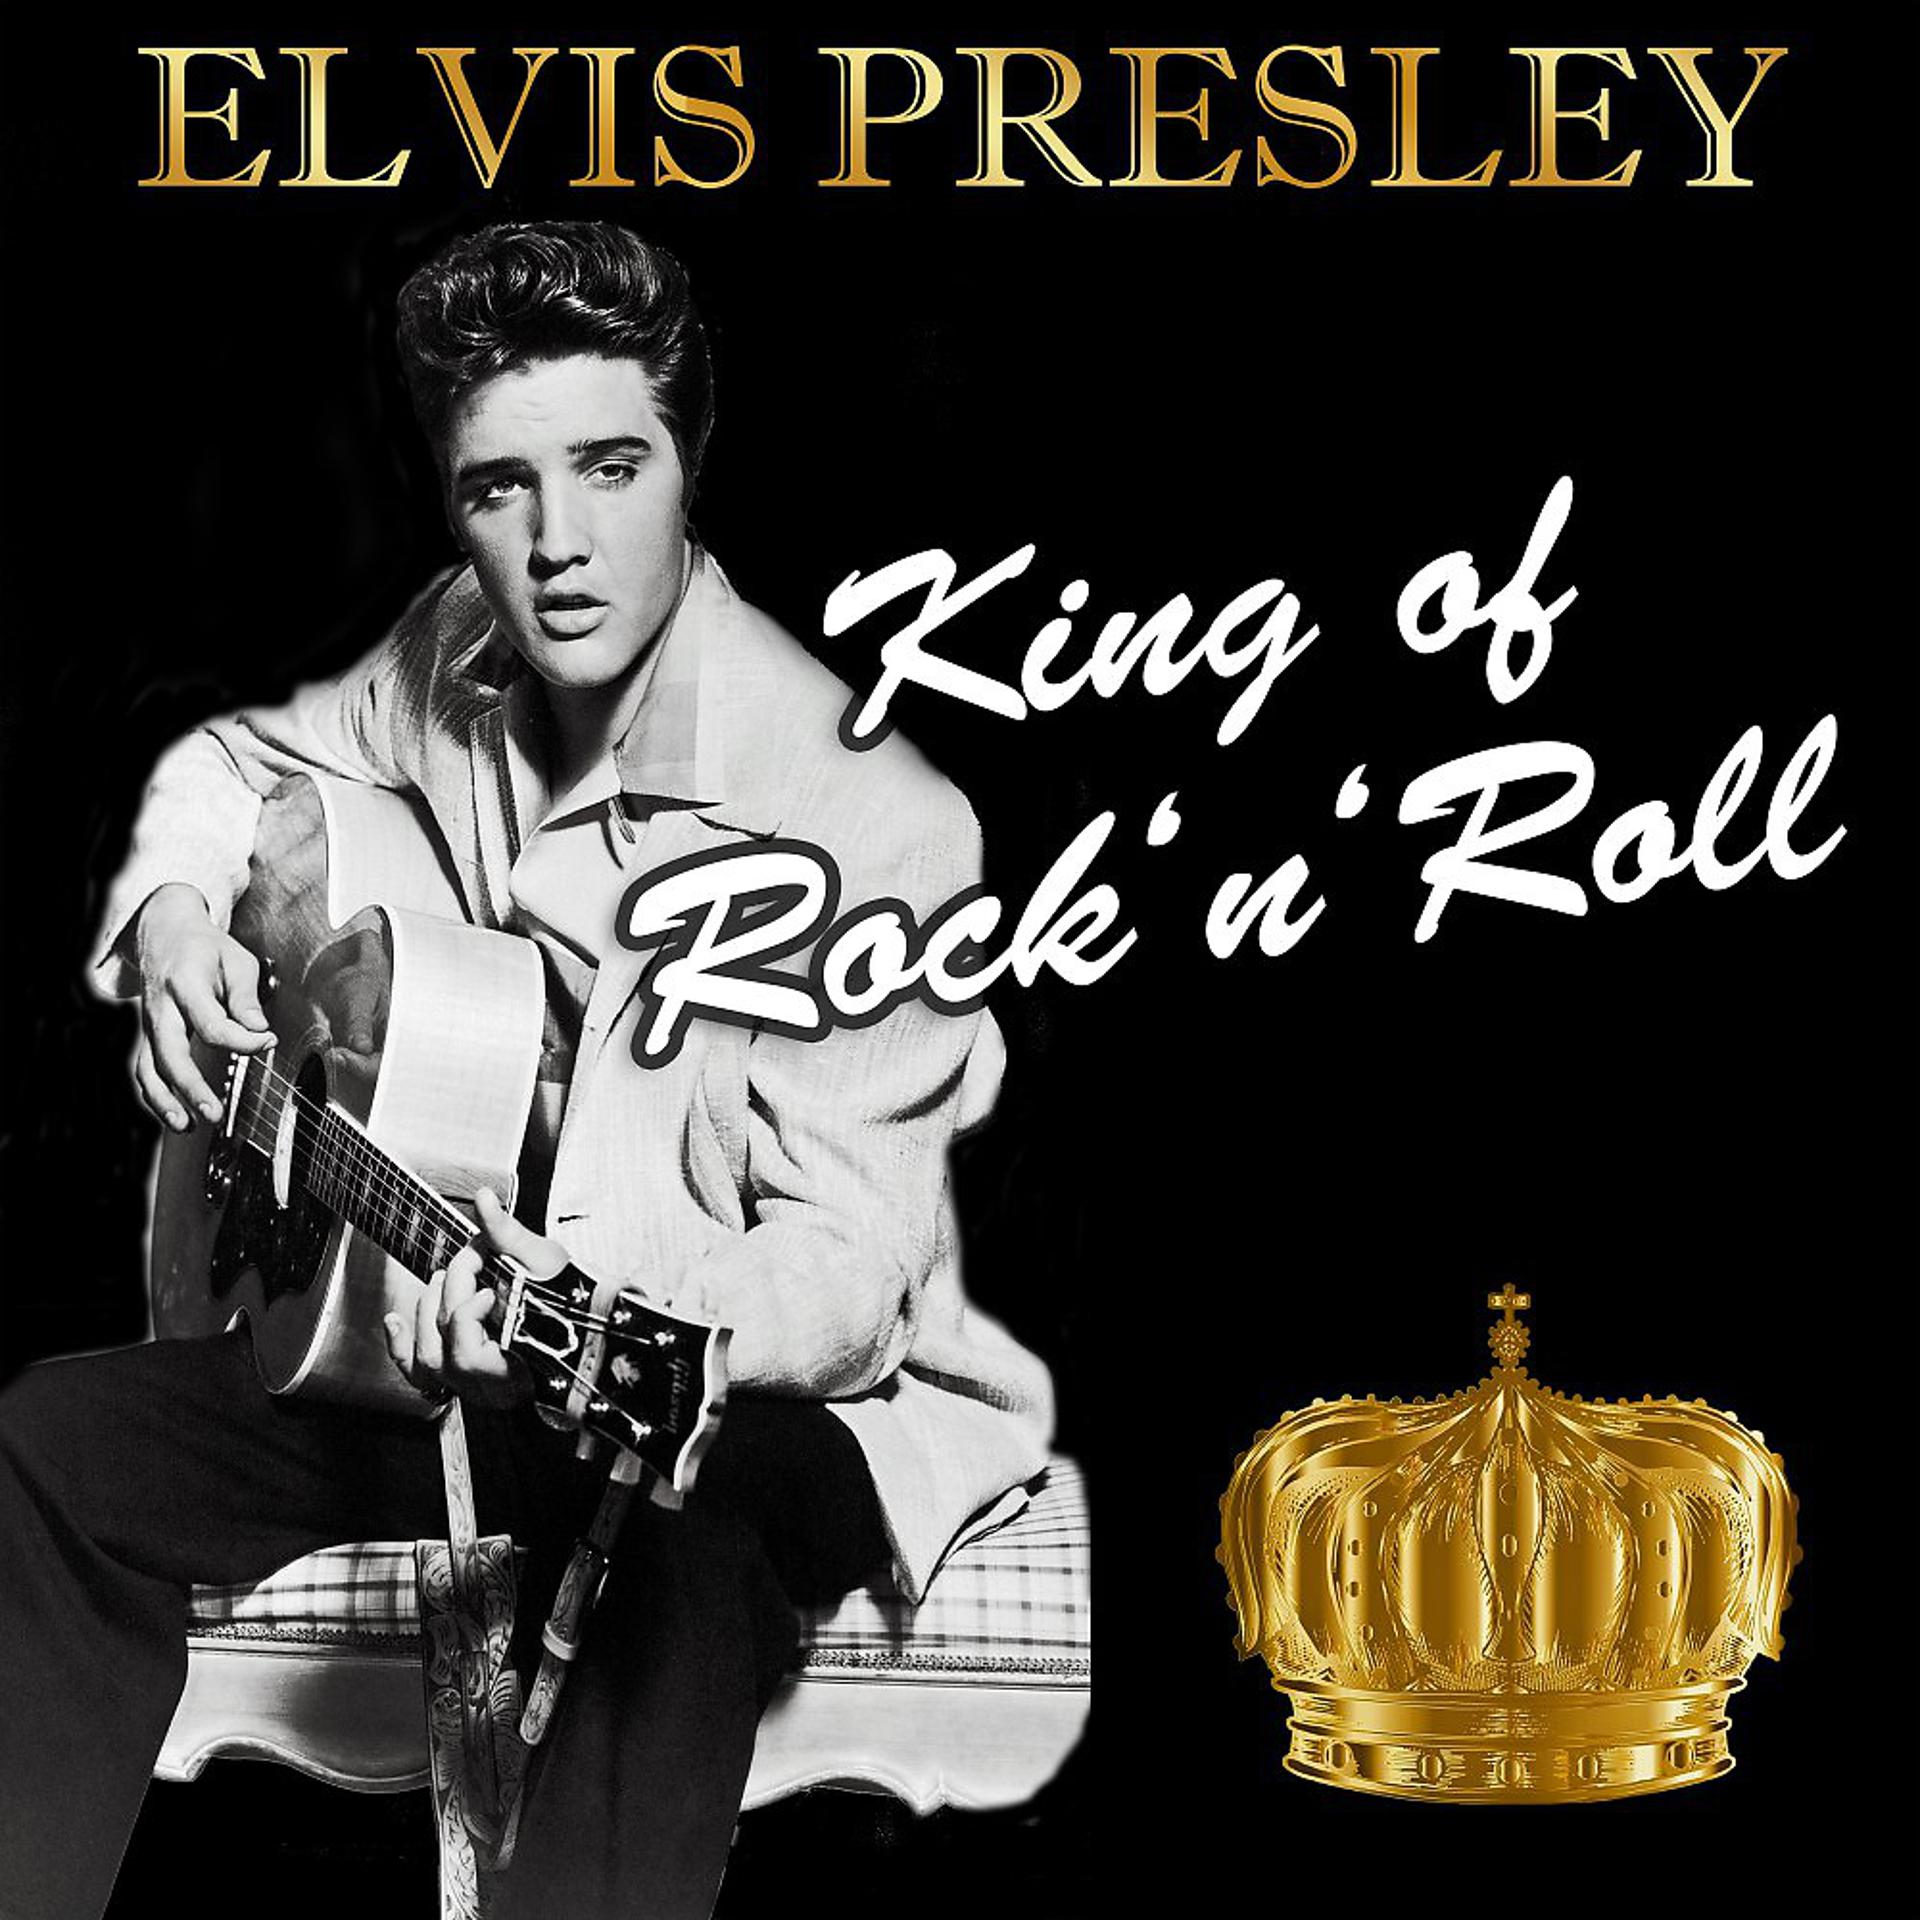 Элвис Пресли. Элвис Пресли 1956. Элвис Пресли 1958. Elvis Presley обложка альбома. Короли рока слушать